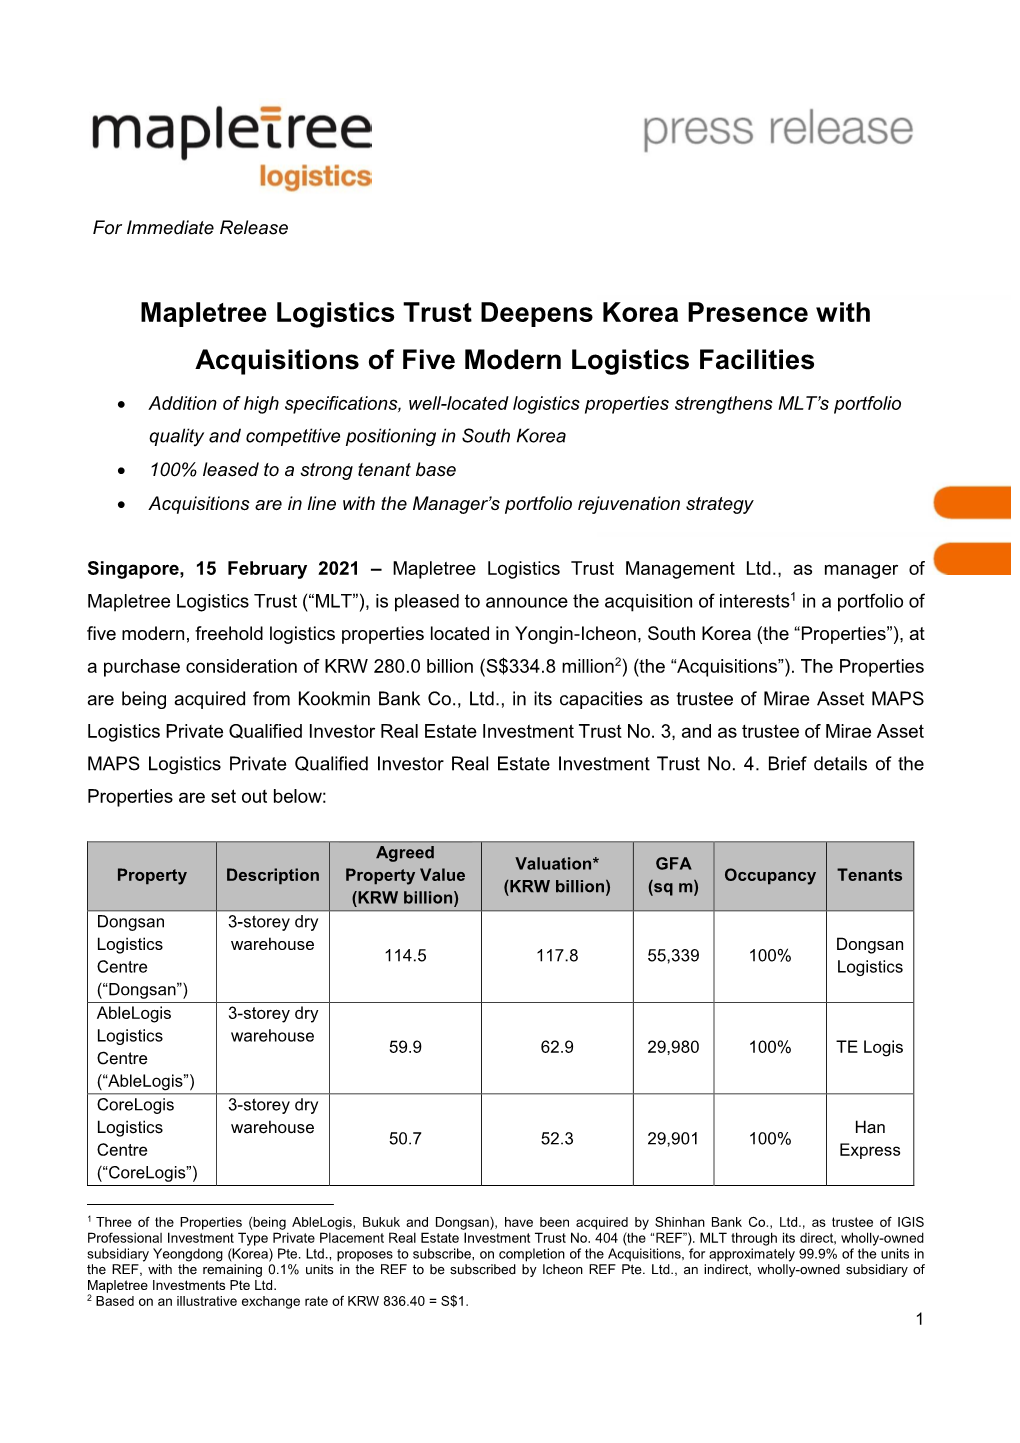 Mapletree Logistics Trust Deepens Korea Presence with Acquisitions of Five Modern Logistics Facilities